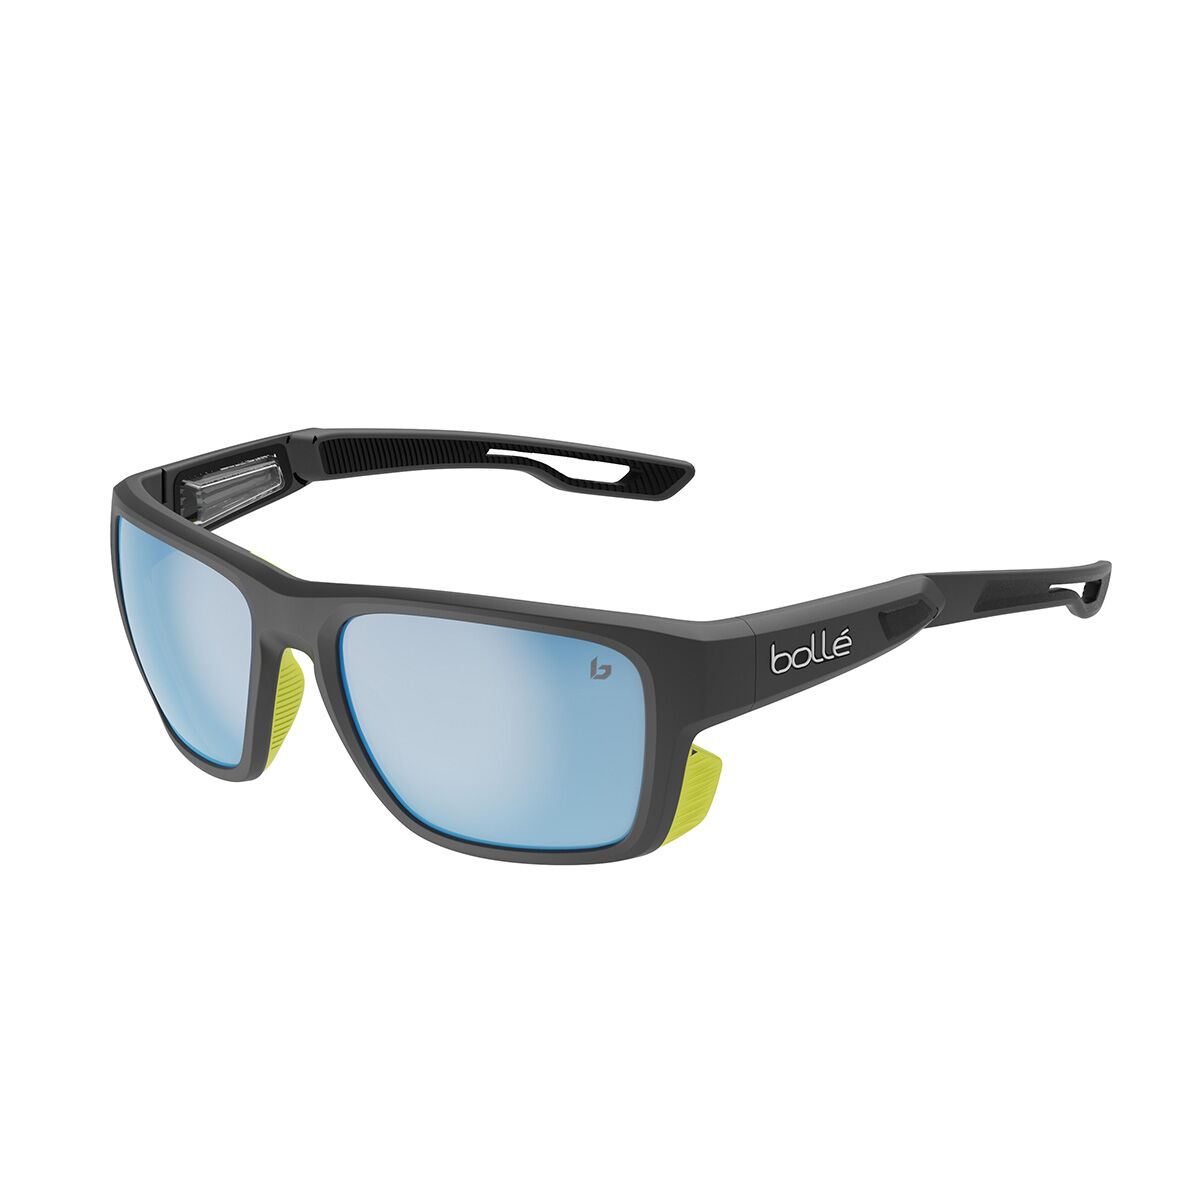 Bolle sunglasses HOLMAN FLOATABLE 12463